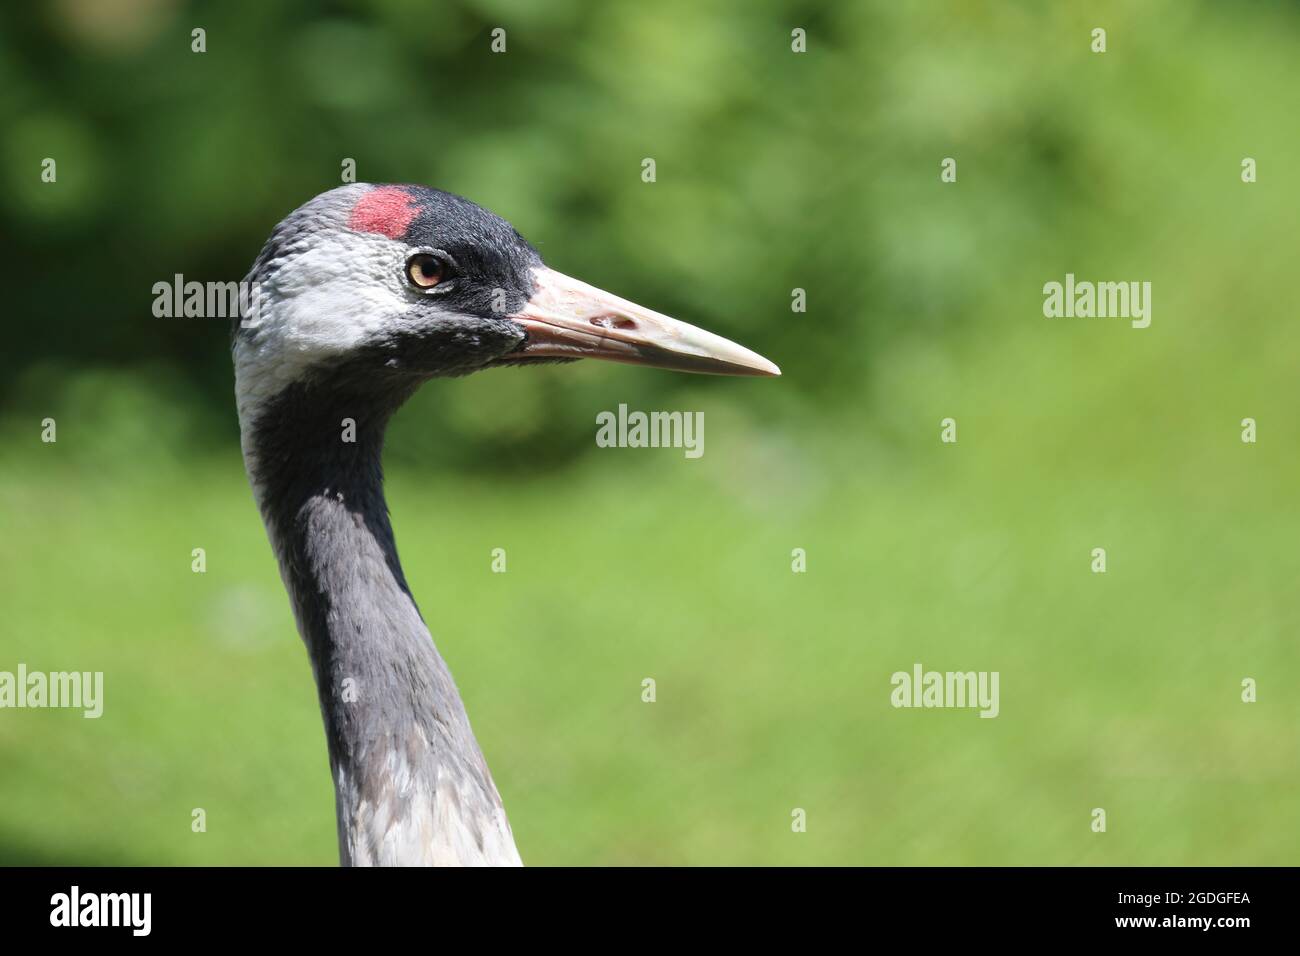 Grauer Kranich / Common crane / Grus grus Stock Photo